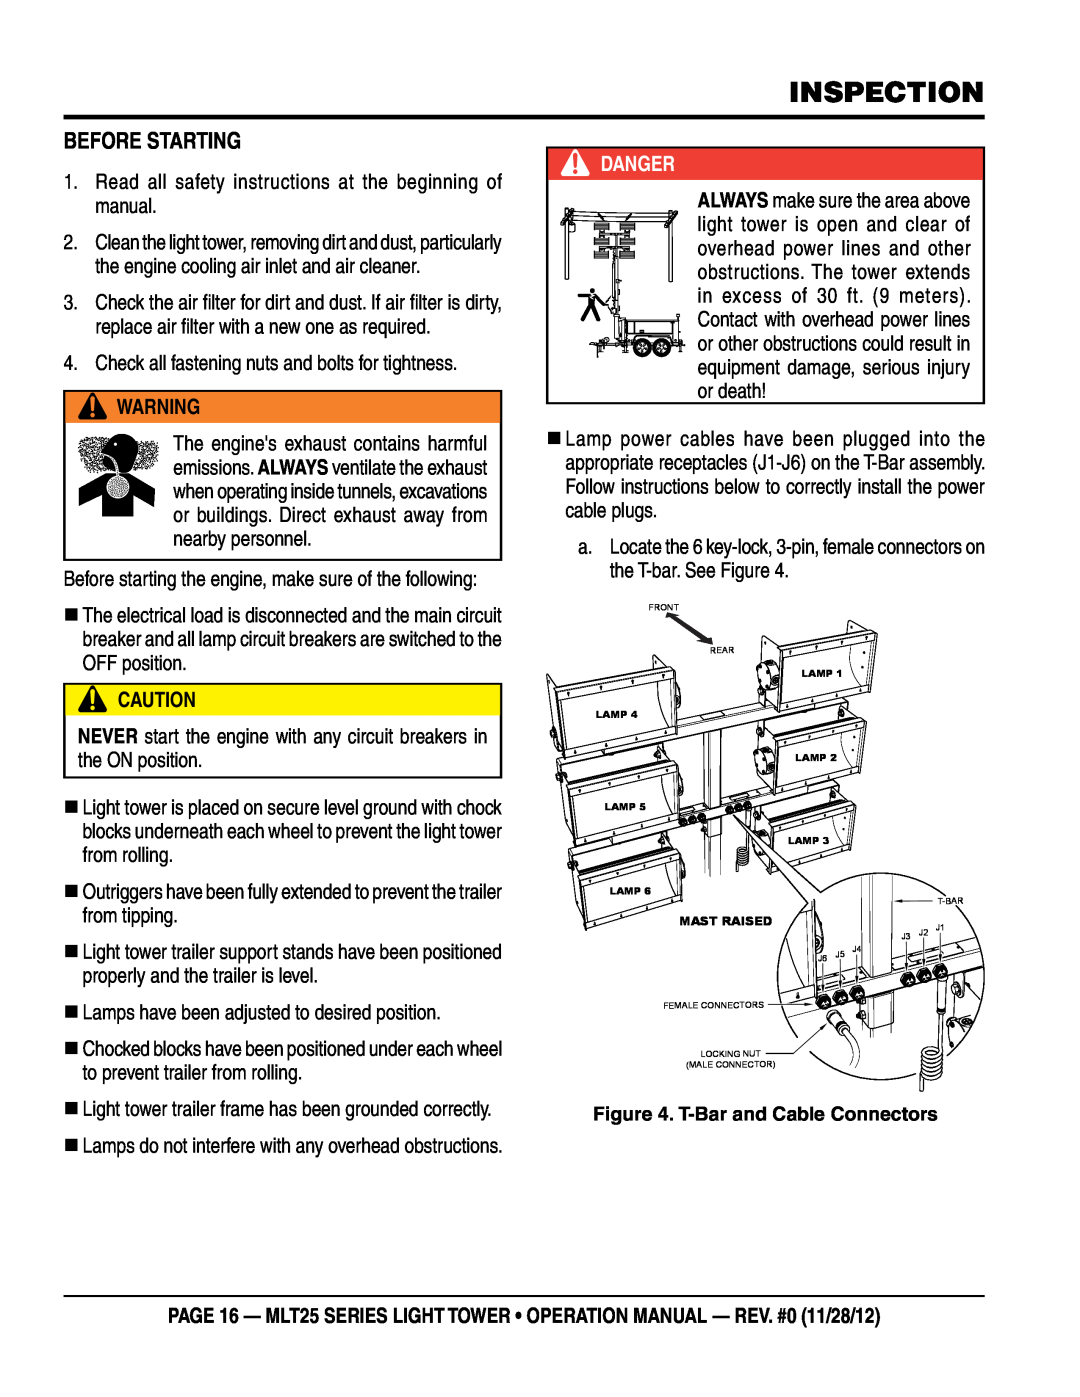 Multiquip MLT25 operation manual inspection, before starting, Danger 